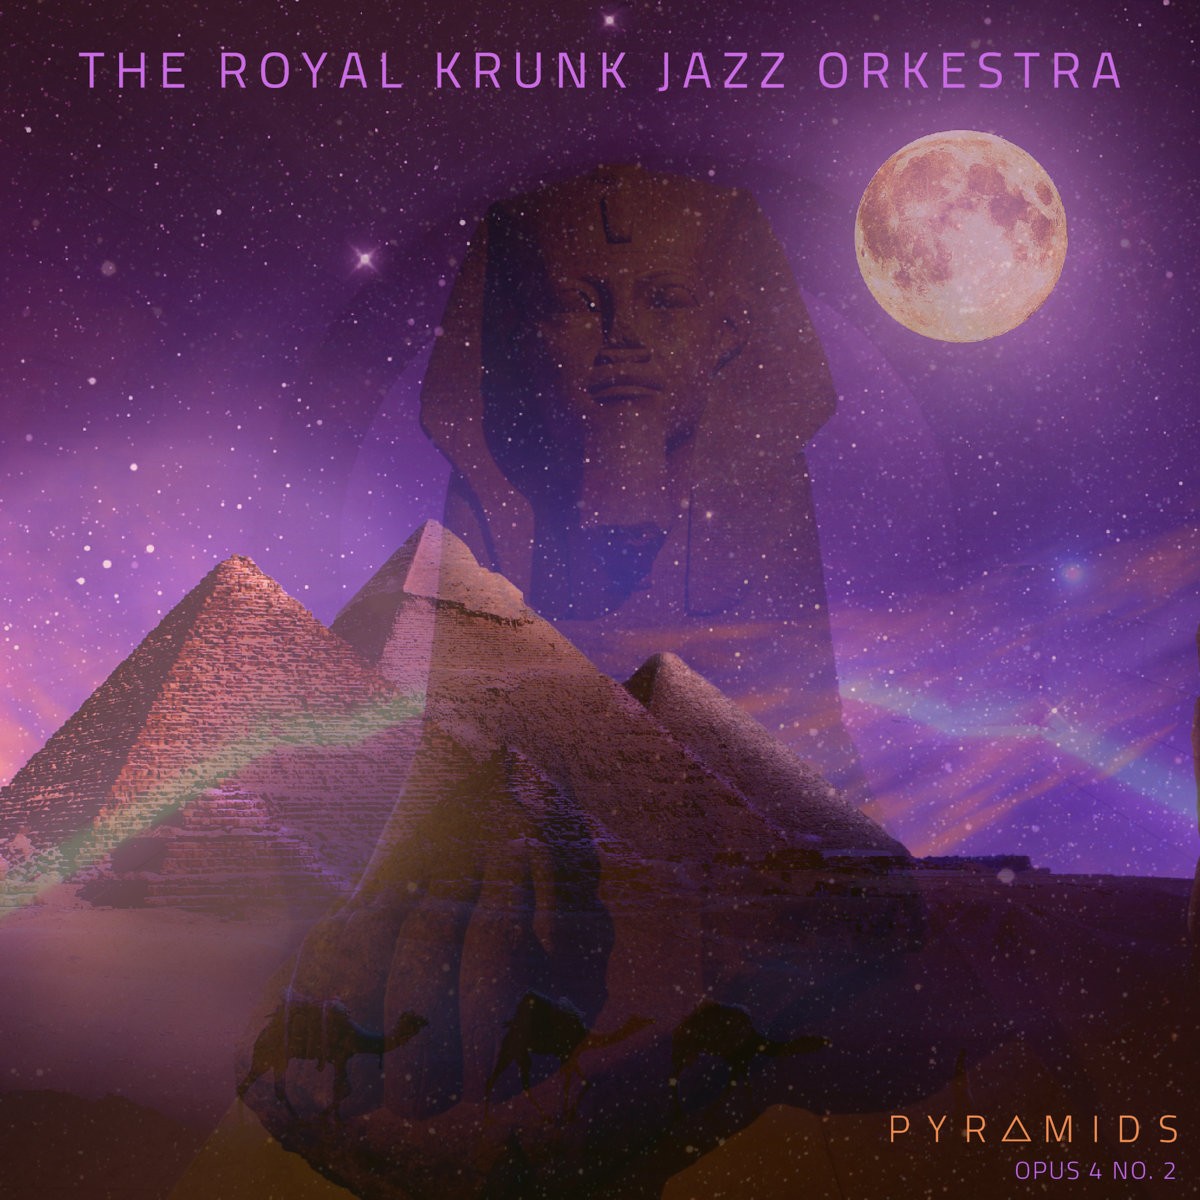 THE ROYAL KRUNK JAZZ ORCHESTRA - Pyramids: Opus 4 No. 2 cover 